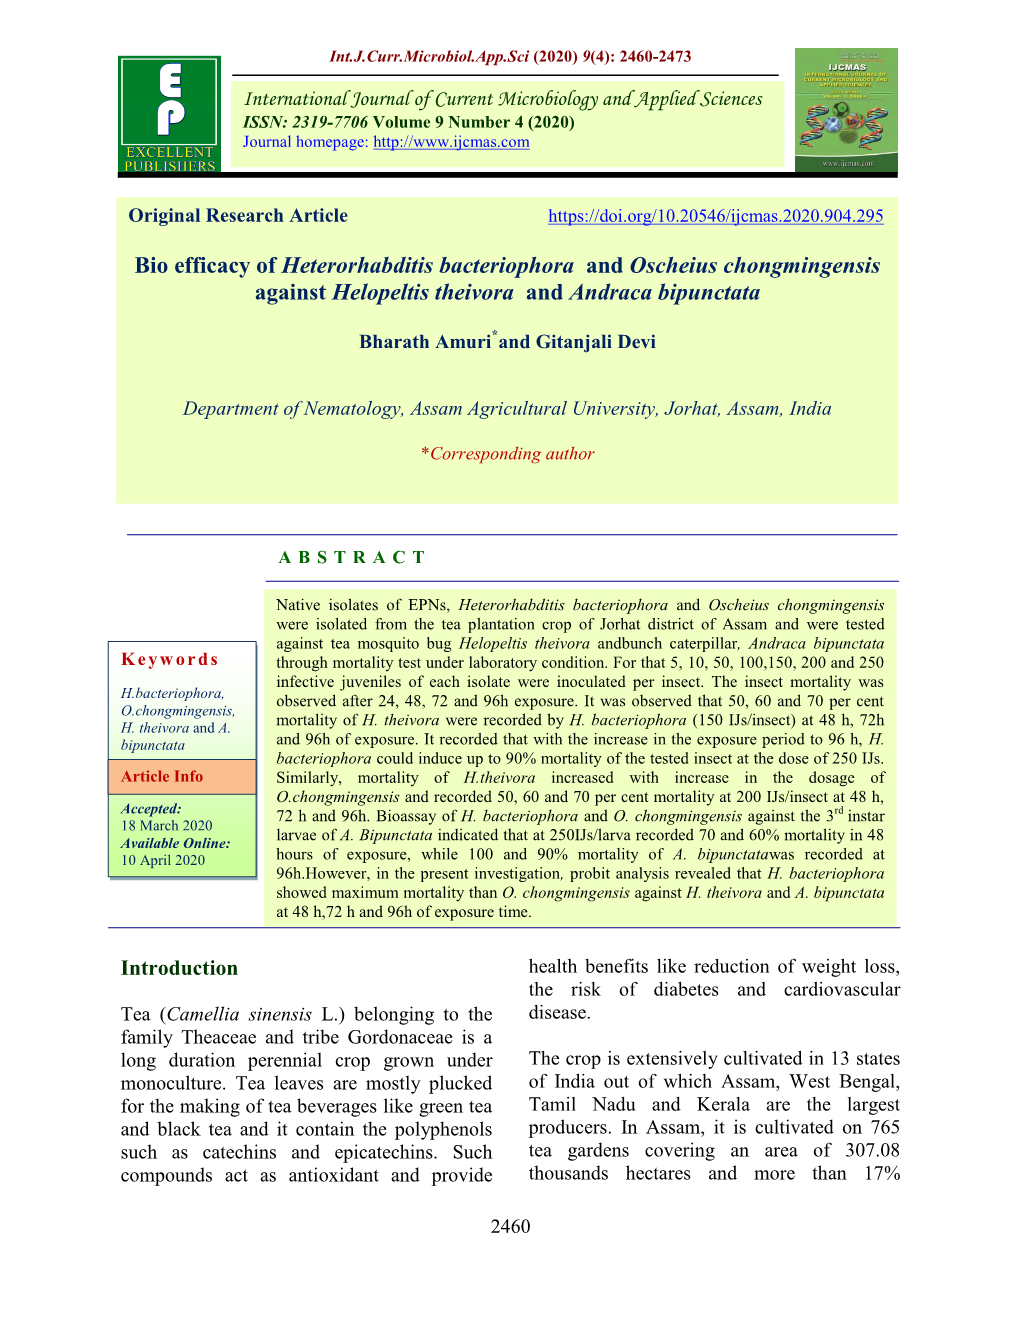 Bio Efficacy of Heterorhabditis Bacteriophora and Oscheius Chongmingensis Against Helopeltis Theivora and Andraca Bipunctata